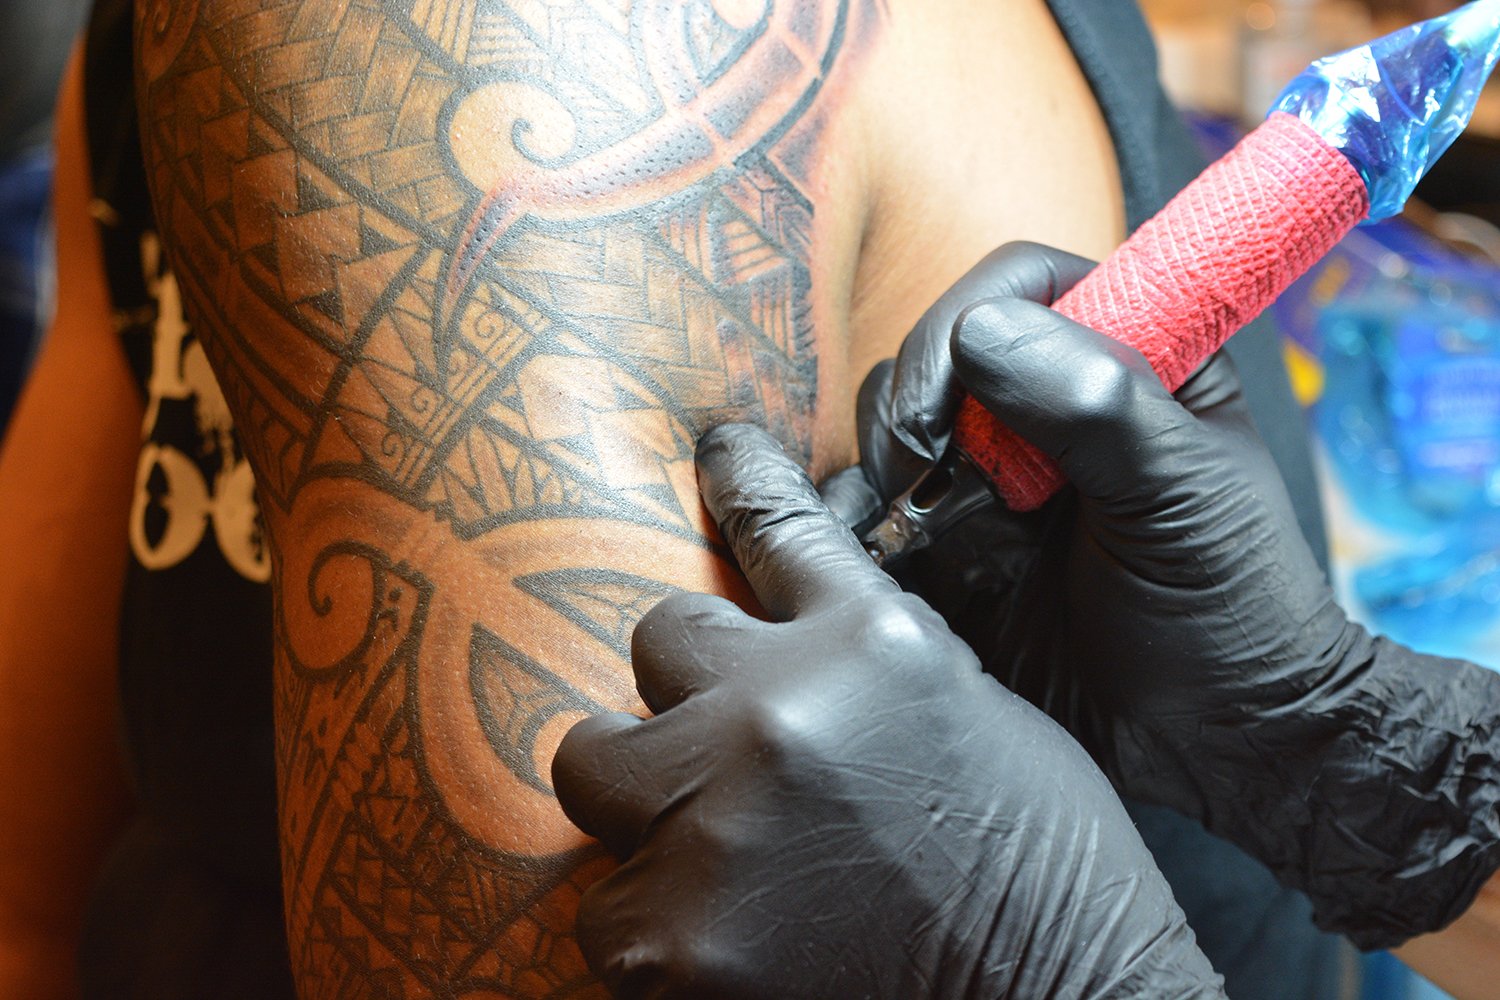 Traditional tribal tattoo by birthmark (mayo)